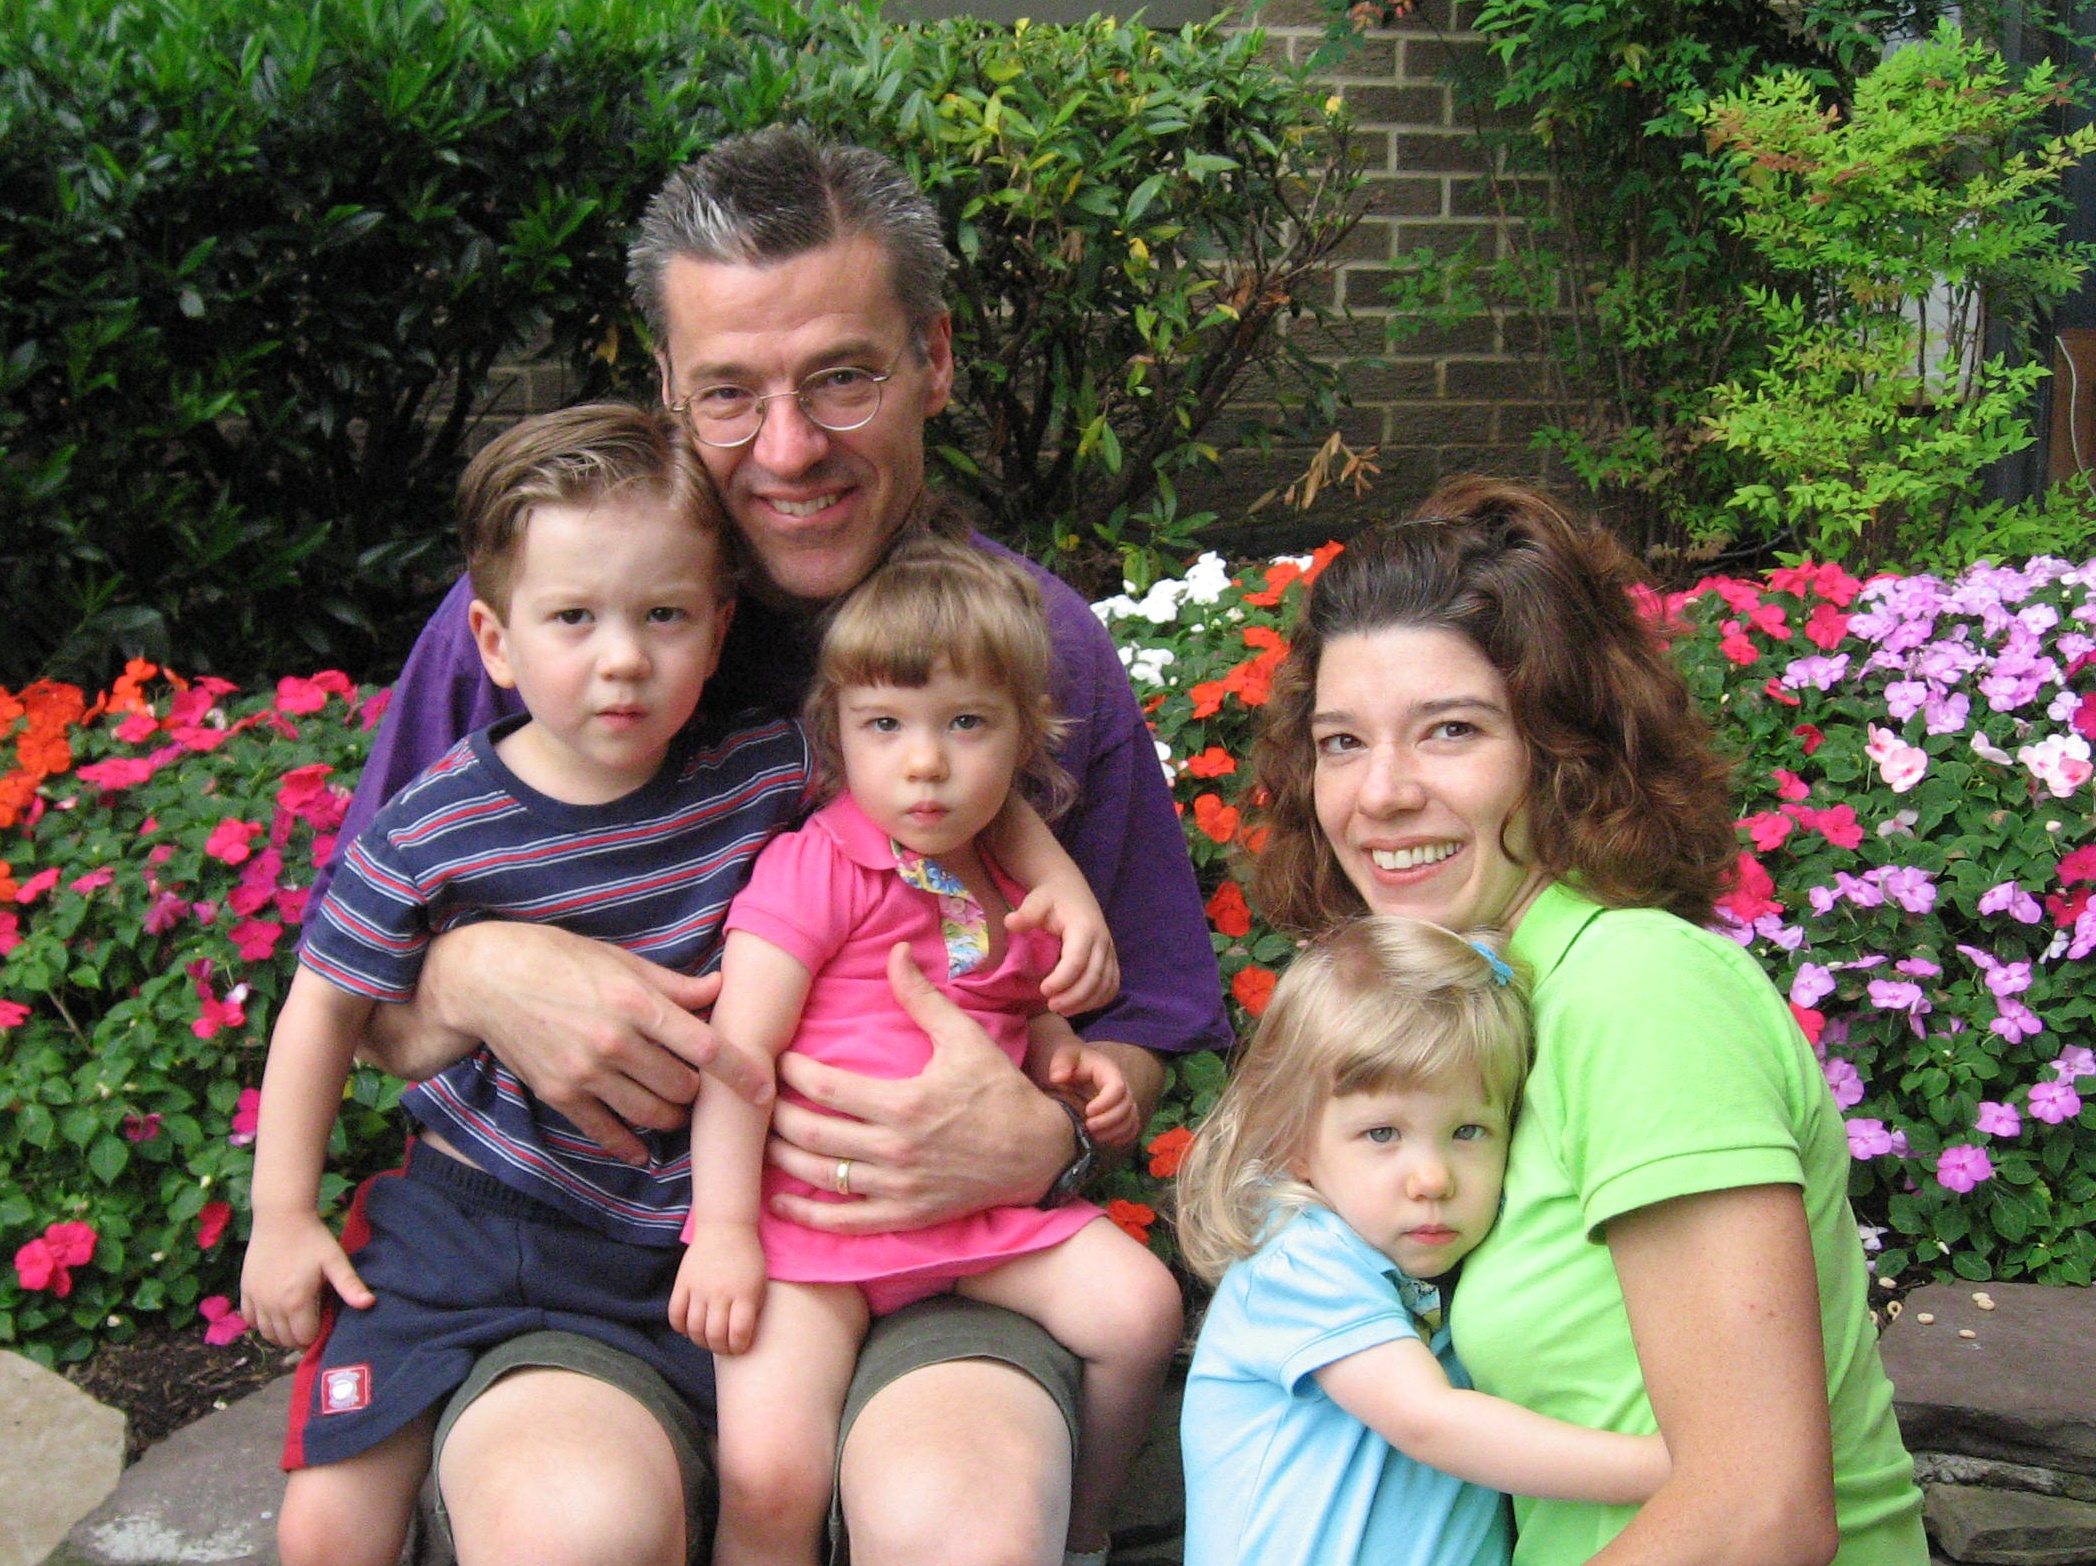 Michael Baur and his family